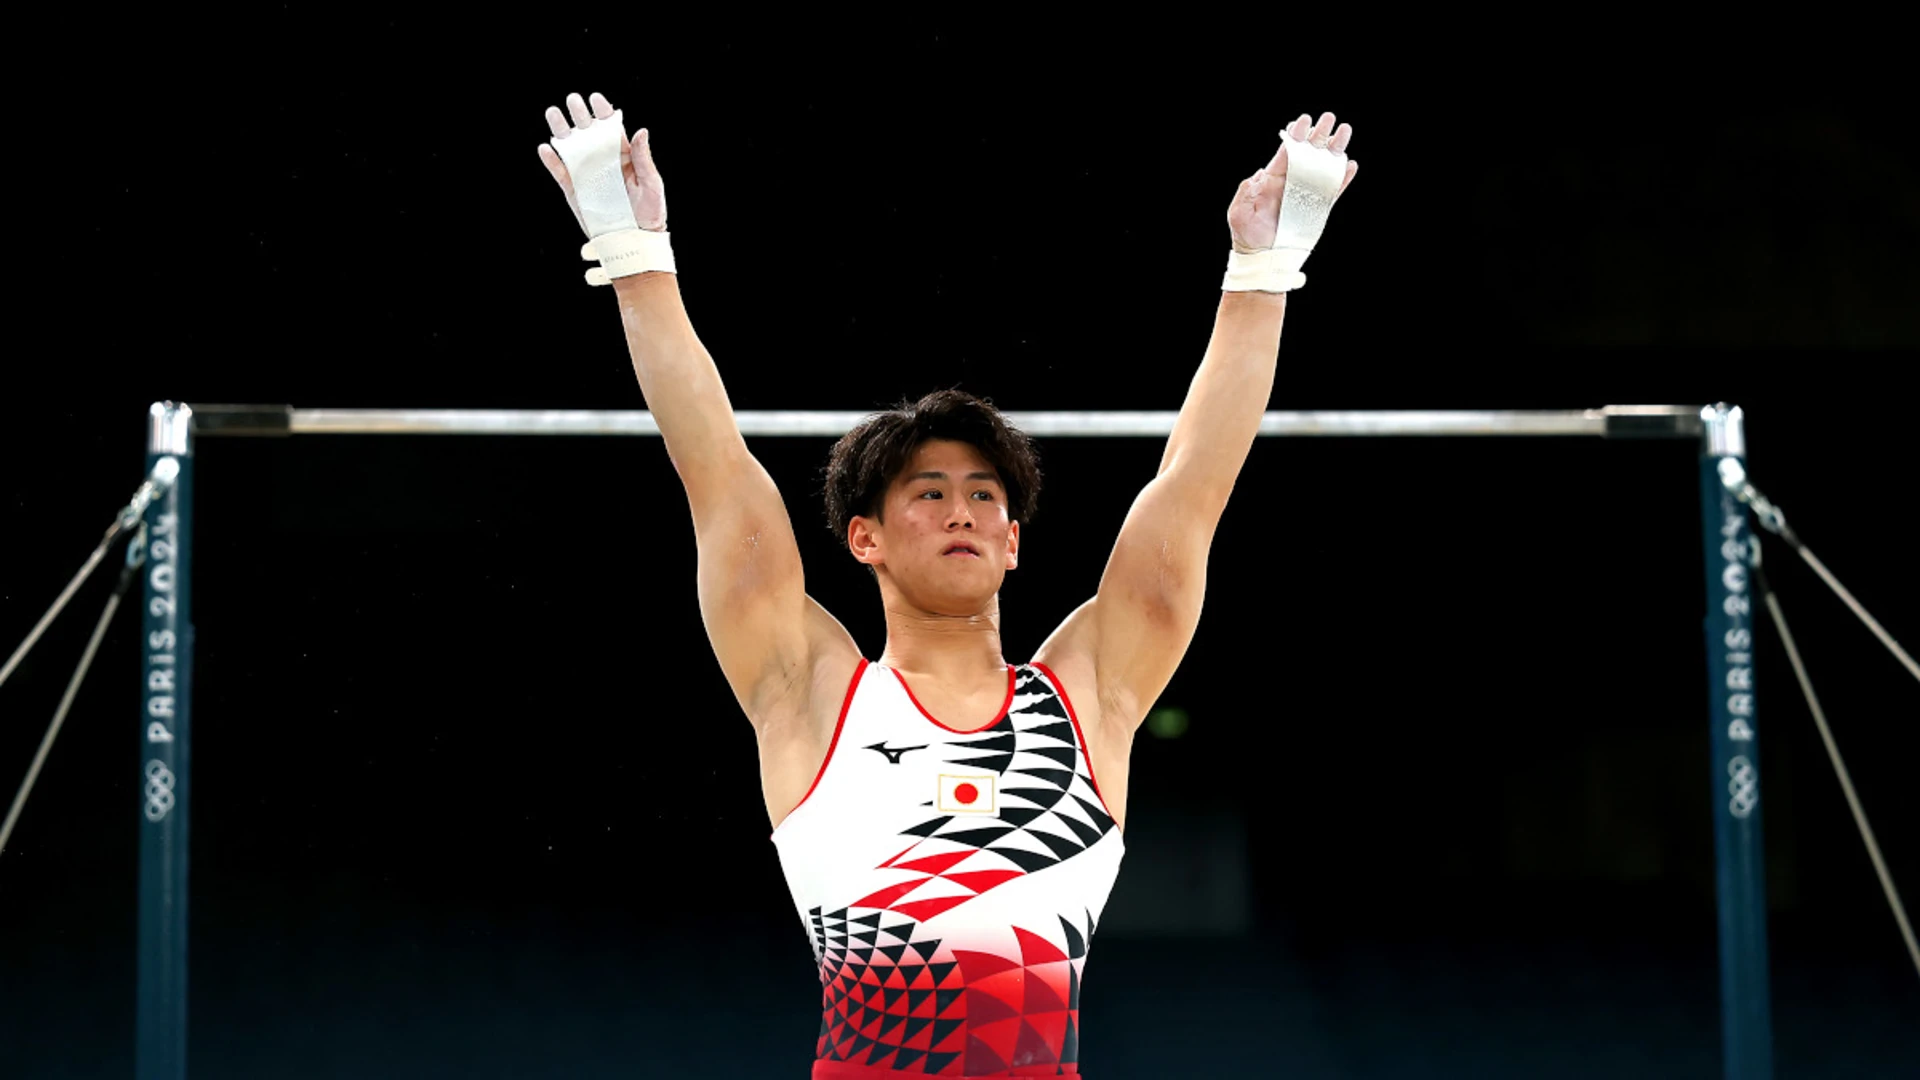 Hashimoto's Japan face Chinese threat at Paris Olympics